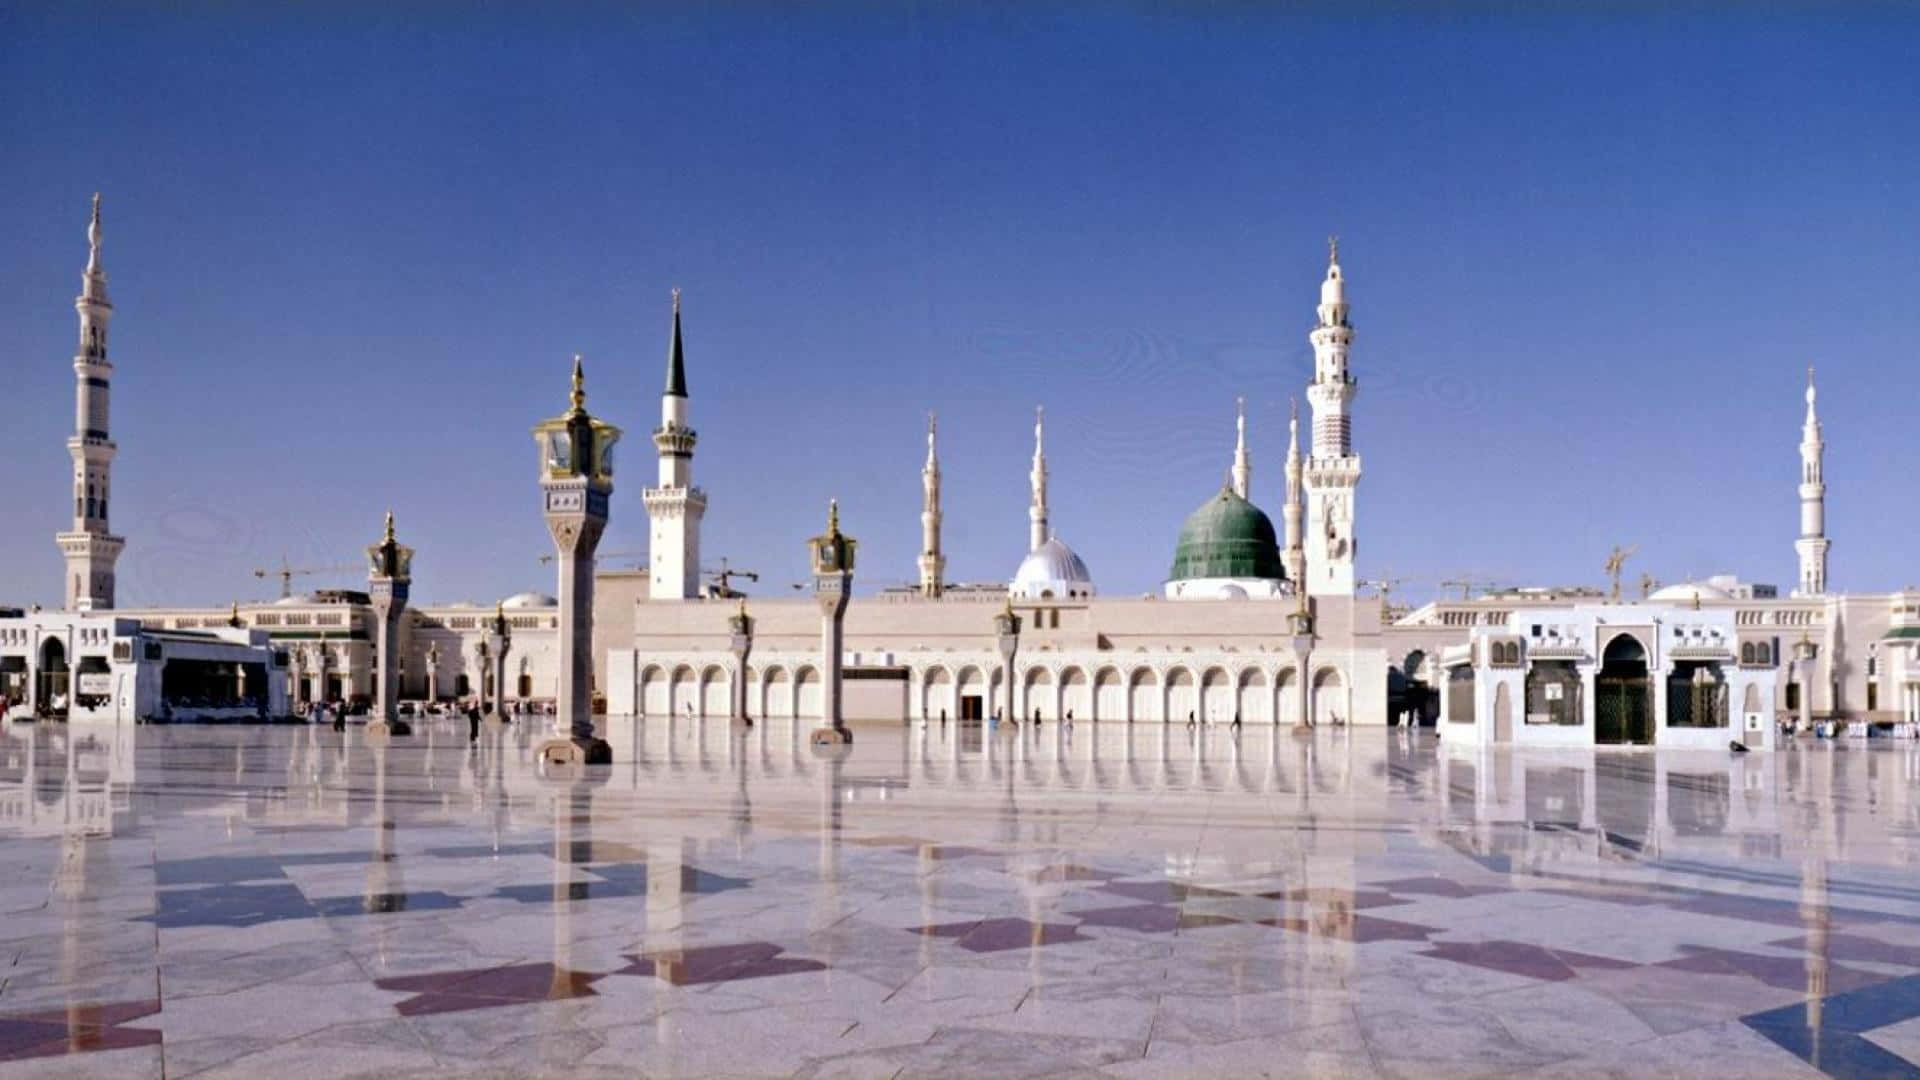 The Grand Mosque In Saudi Arabia